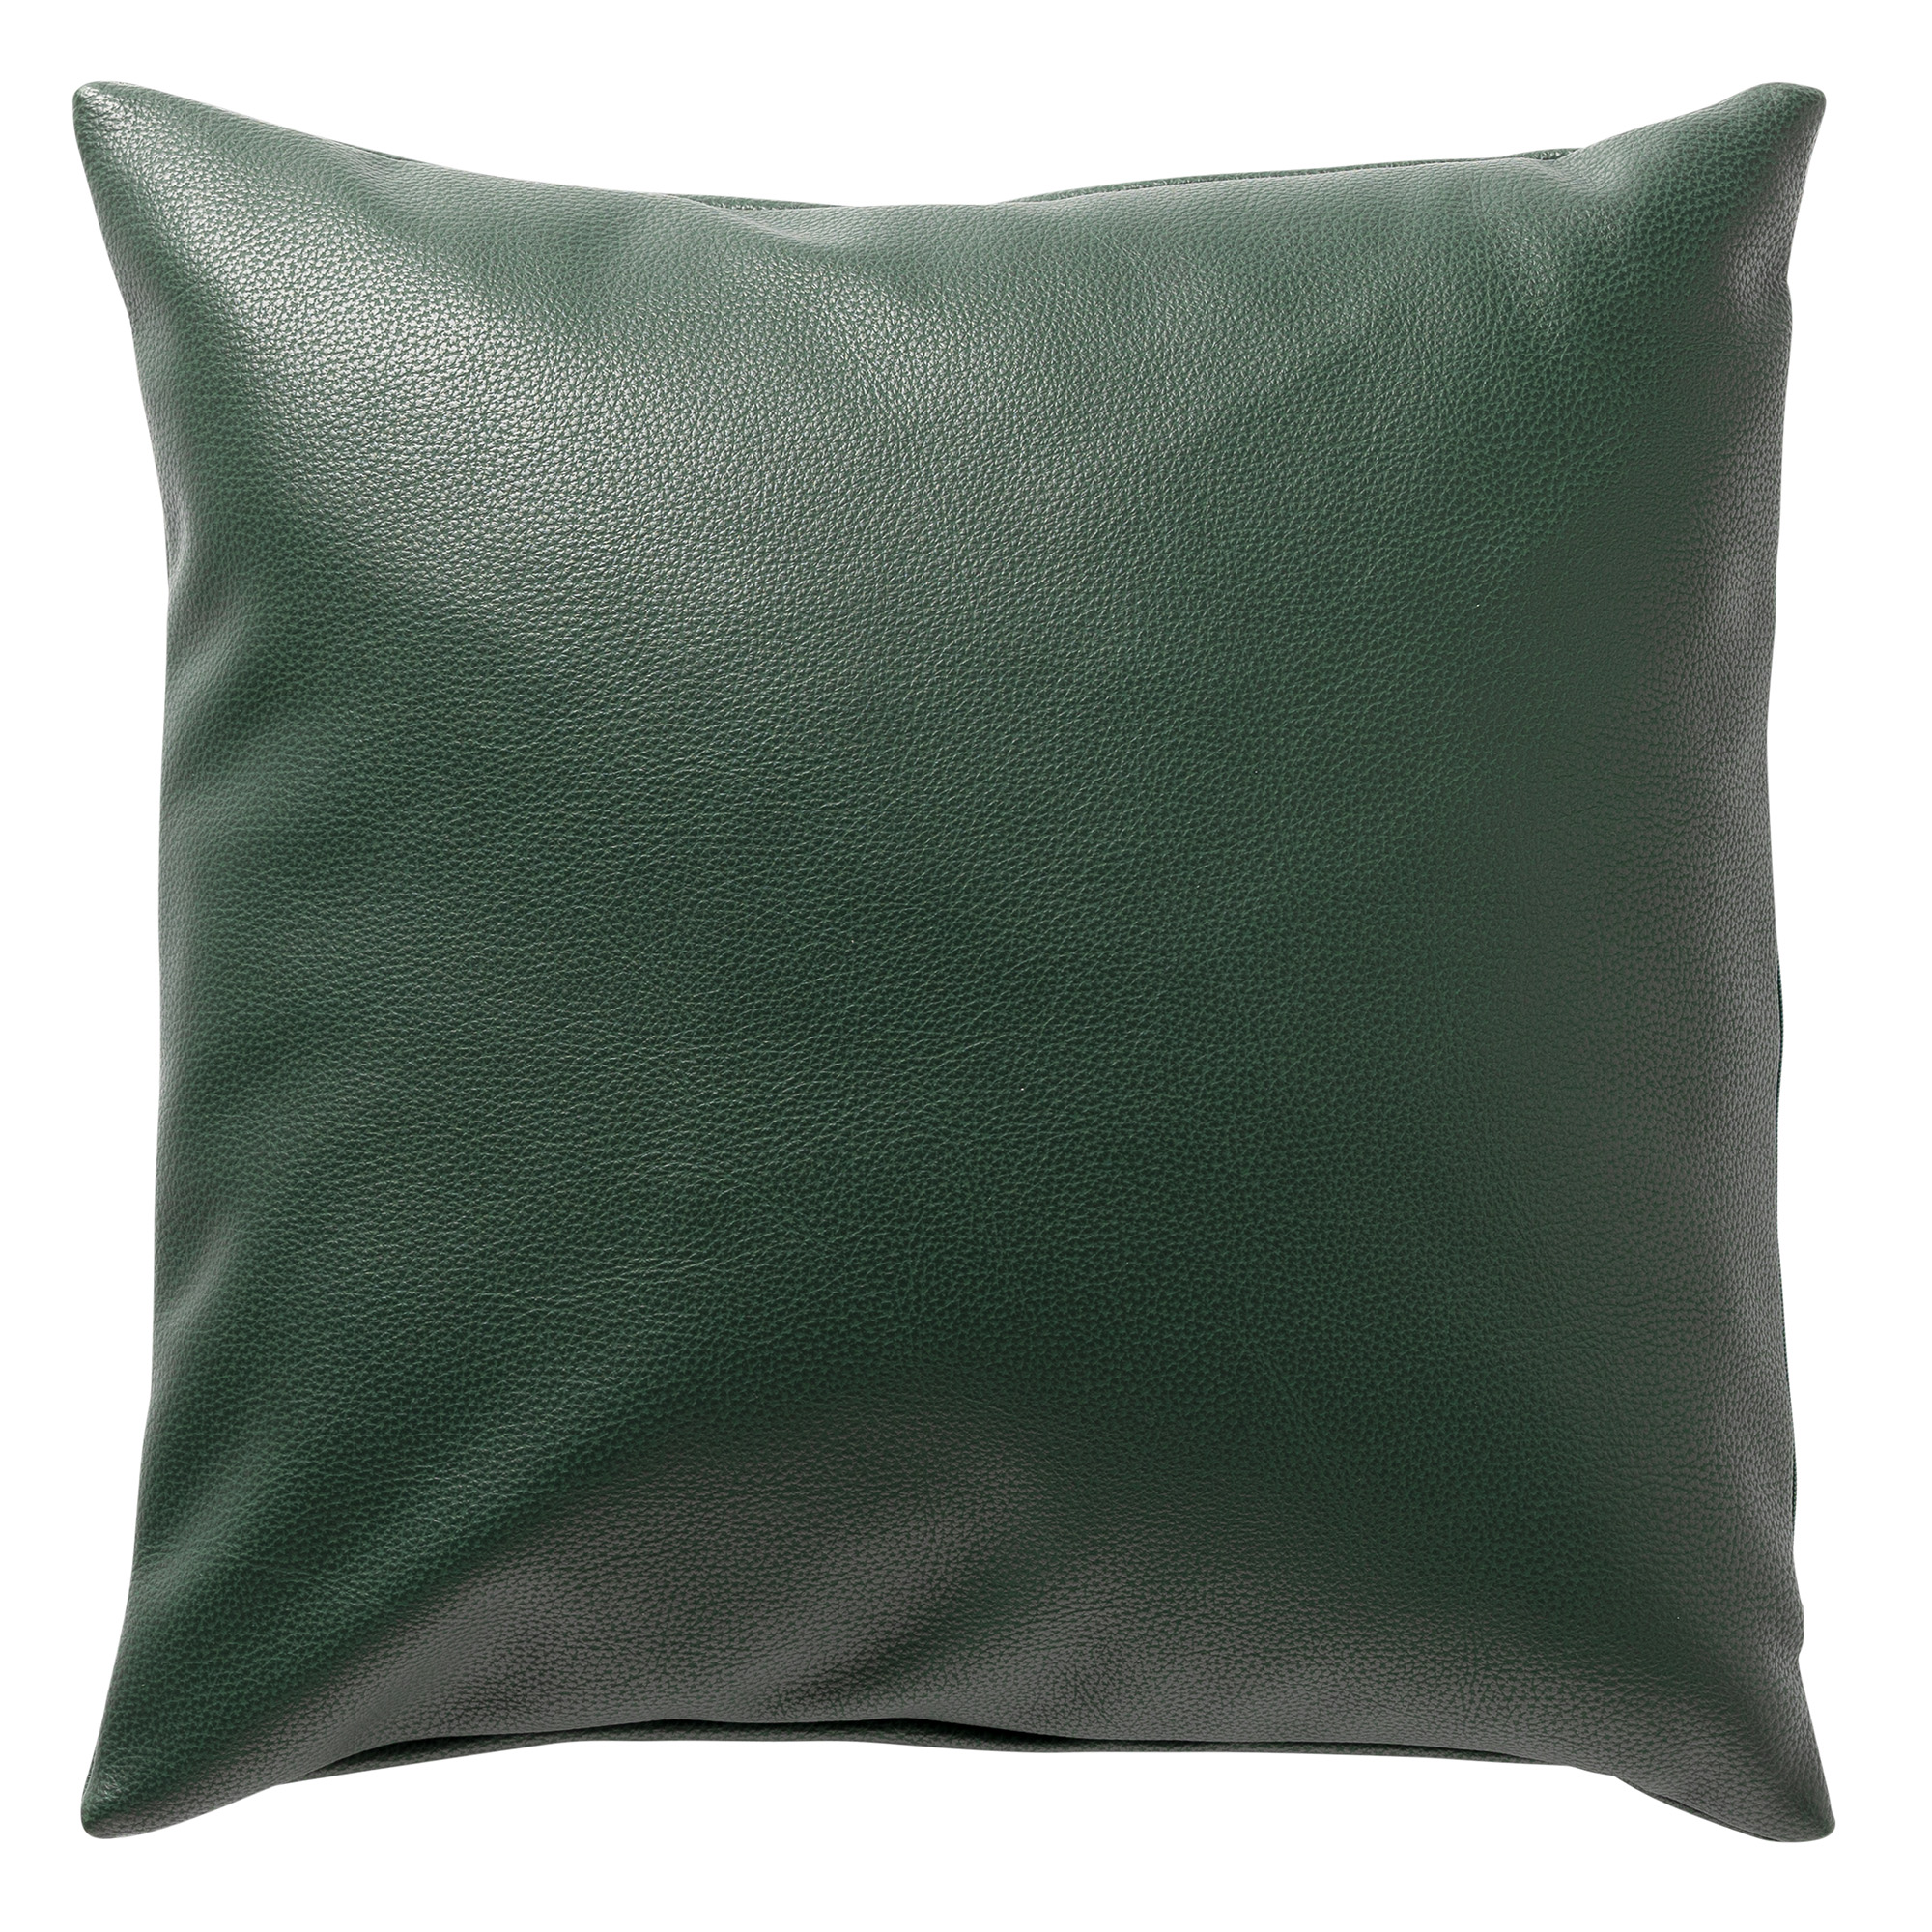 JARED - Coussin 45x45 cm - aspect cuir - couleur unie - Garden Topiary - vert